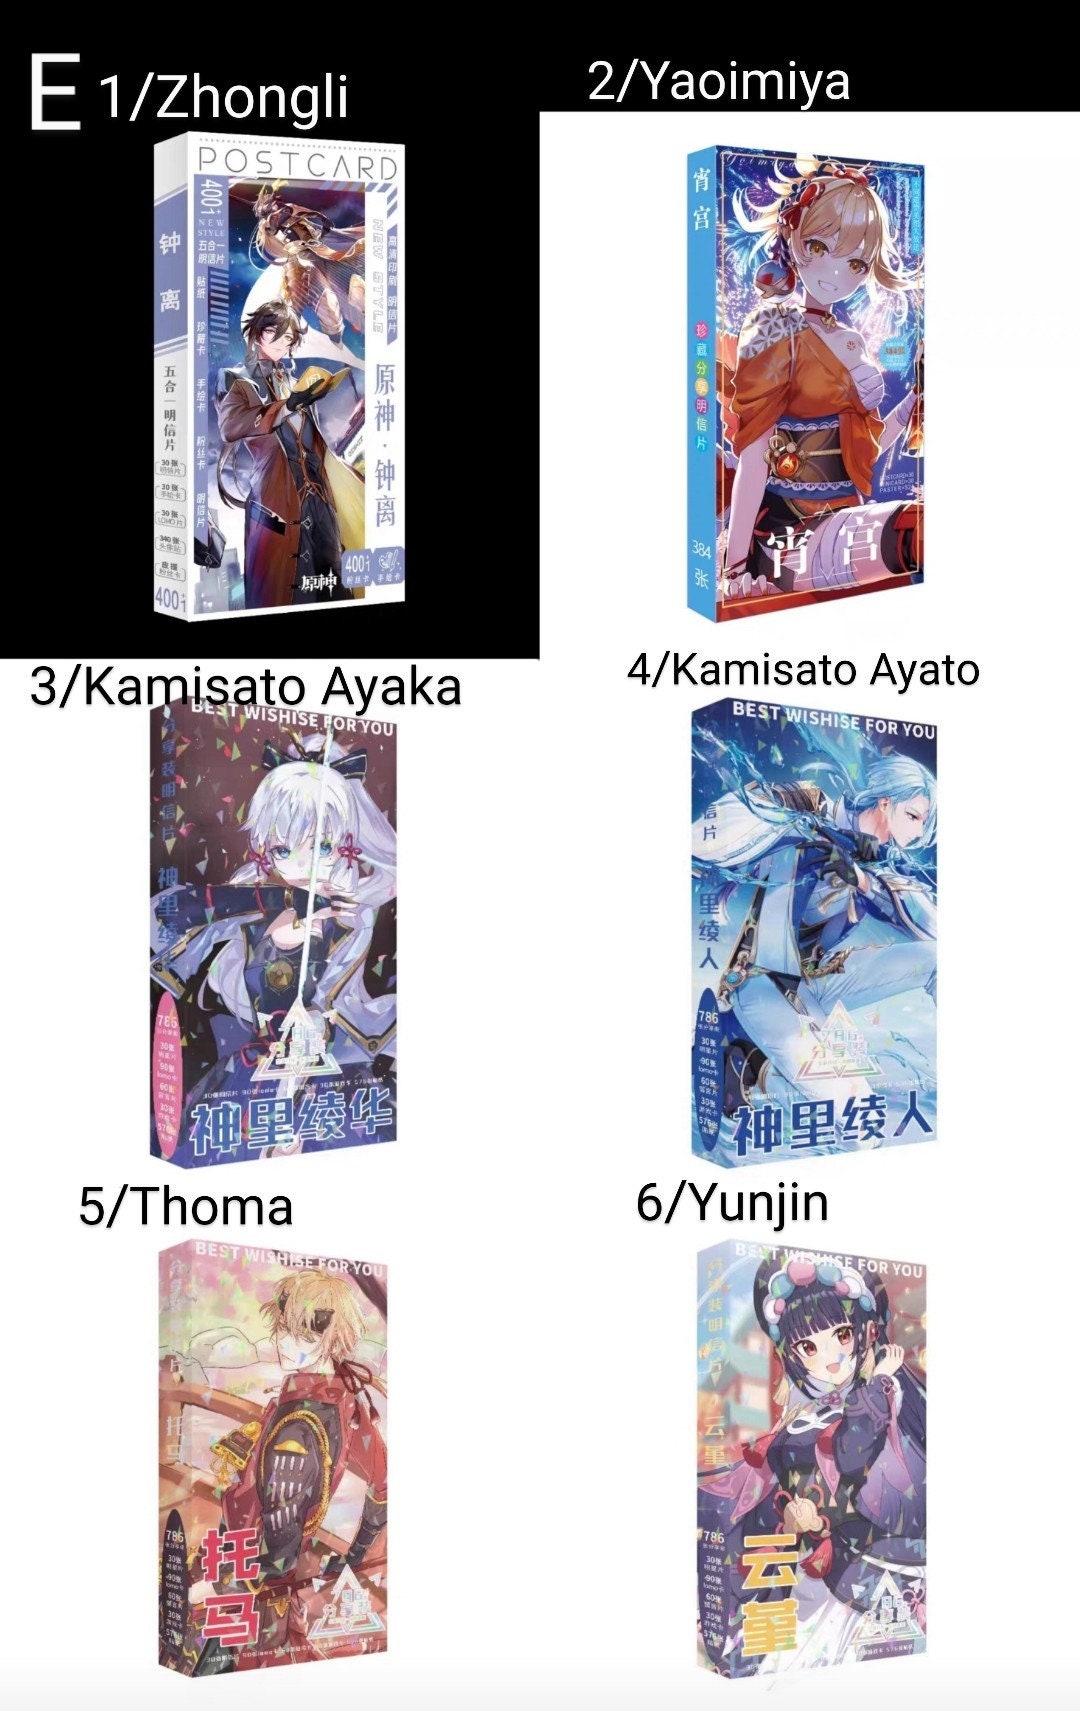 Yokai Watch : Main Character Postcard for Sale by Animos